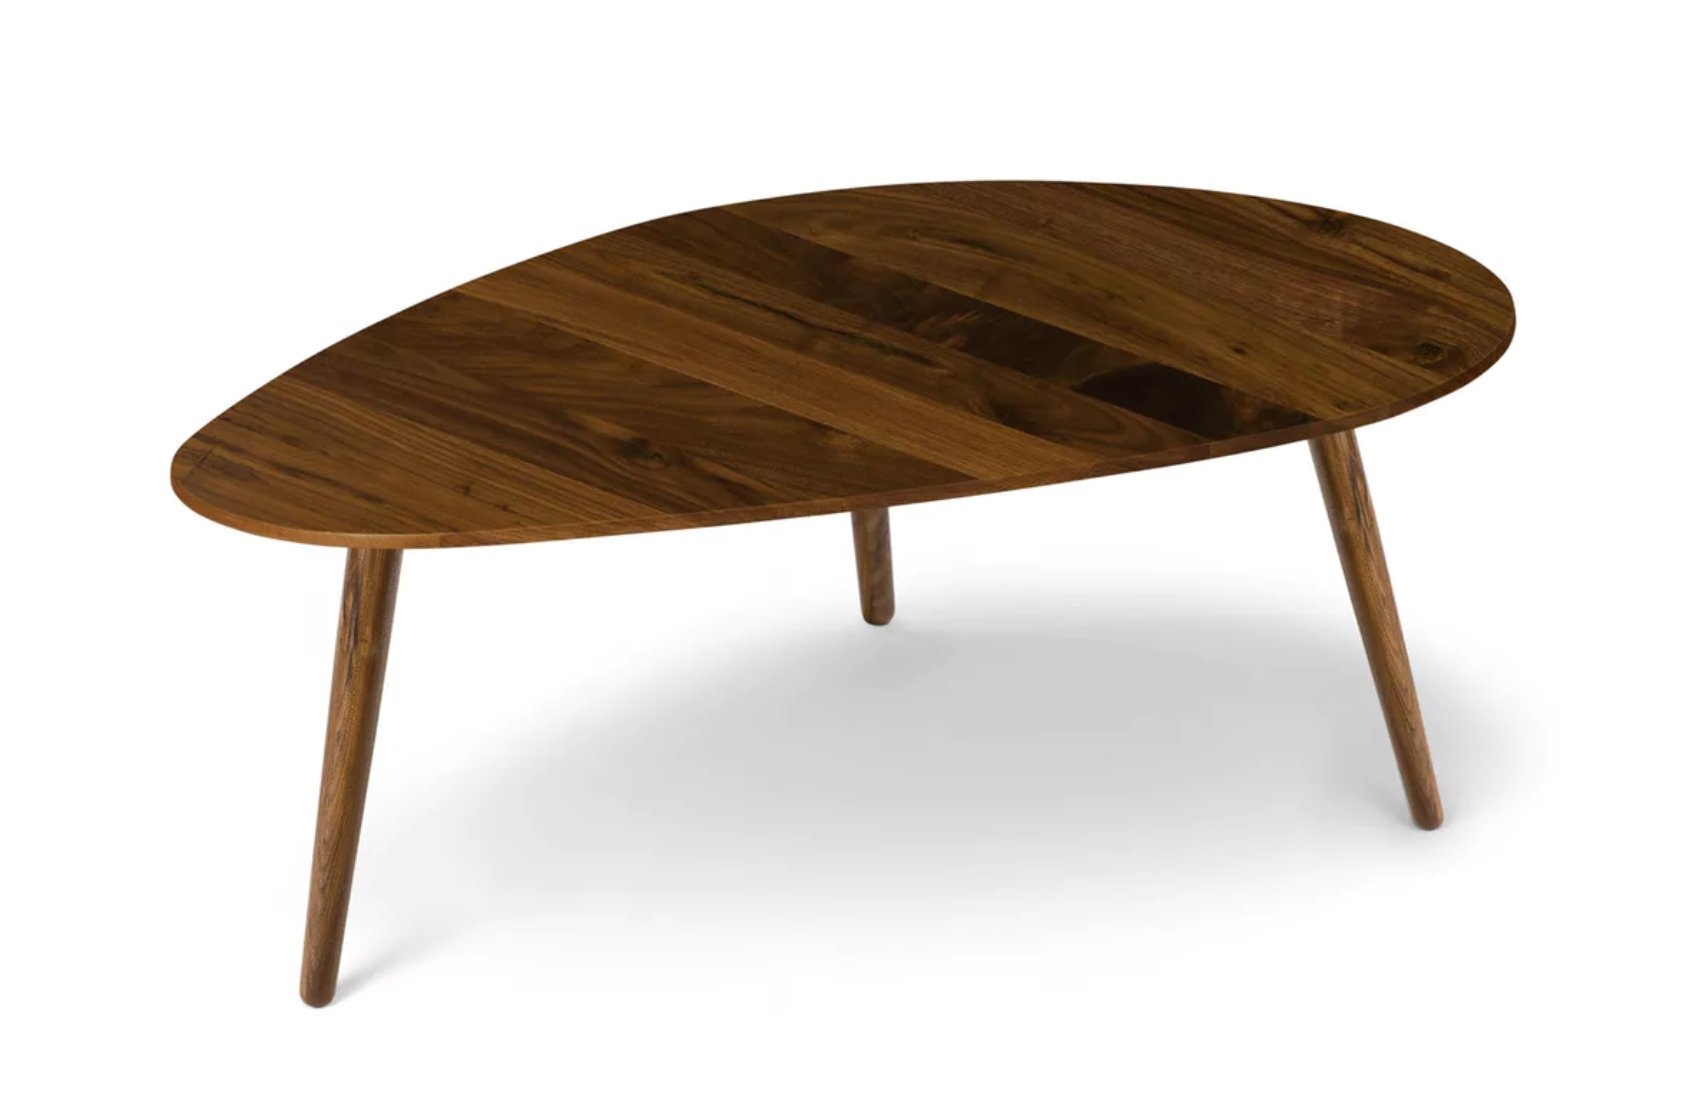 AMOEBA Mid century modern coffee table / solid wood center table - Image 0